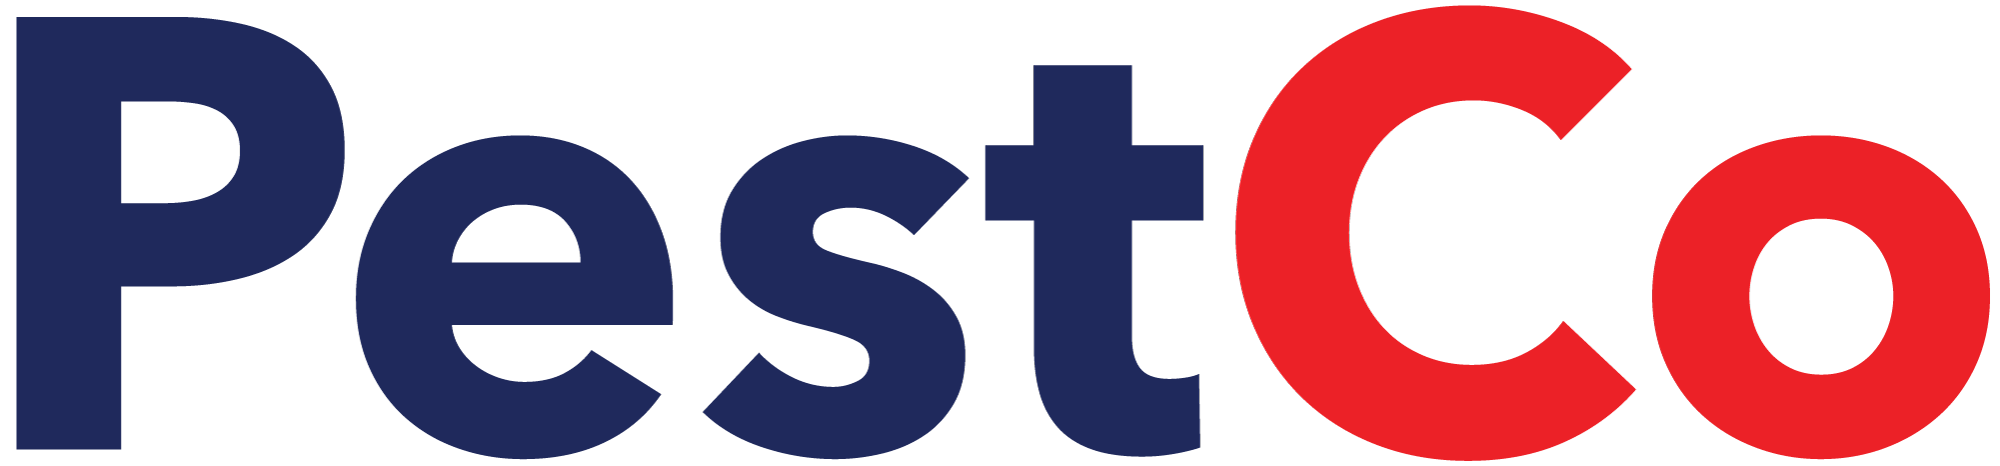 PestCo Holdings Logo